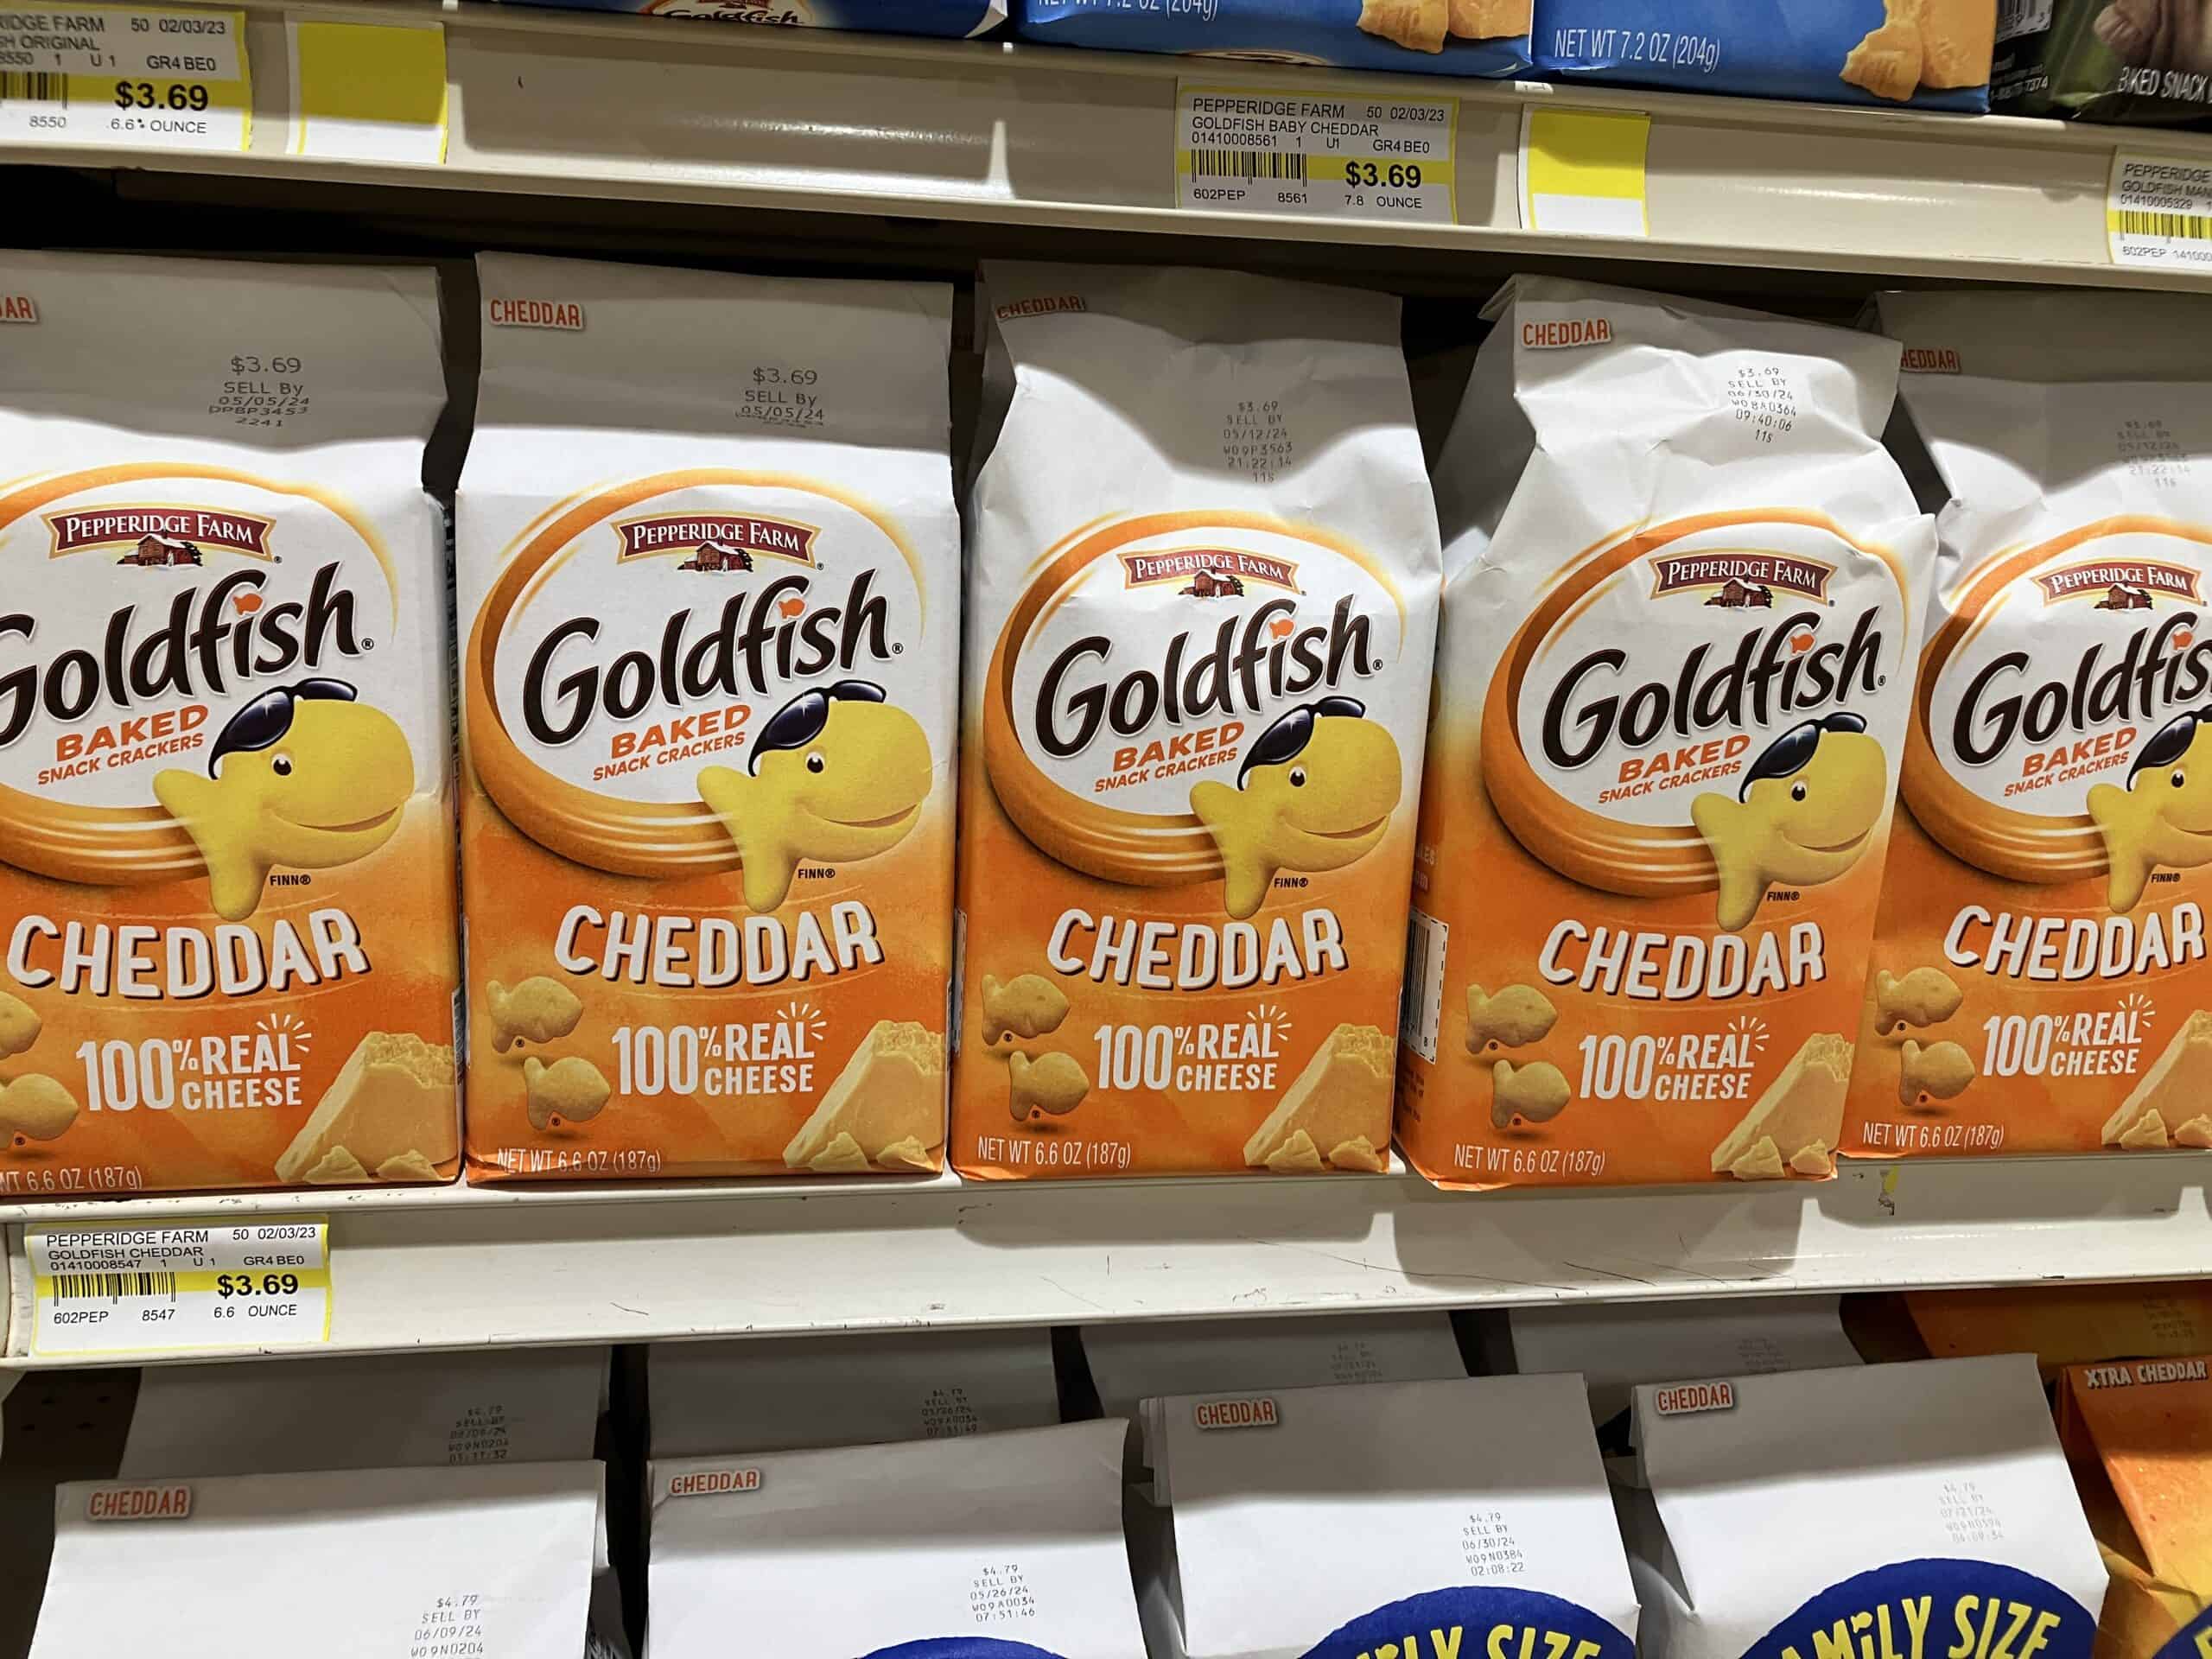 Goldfish cheddar crackers